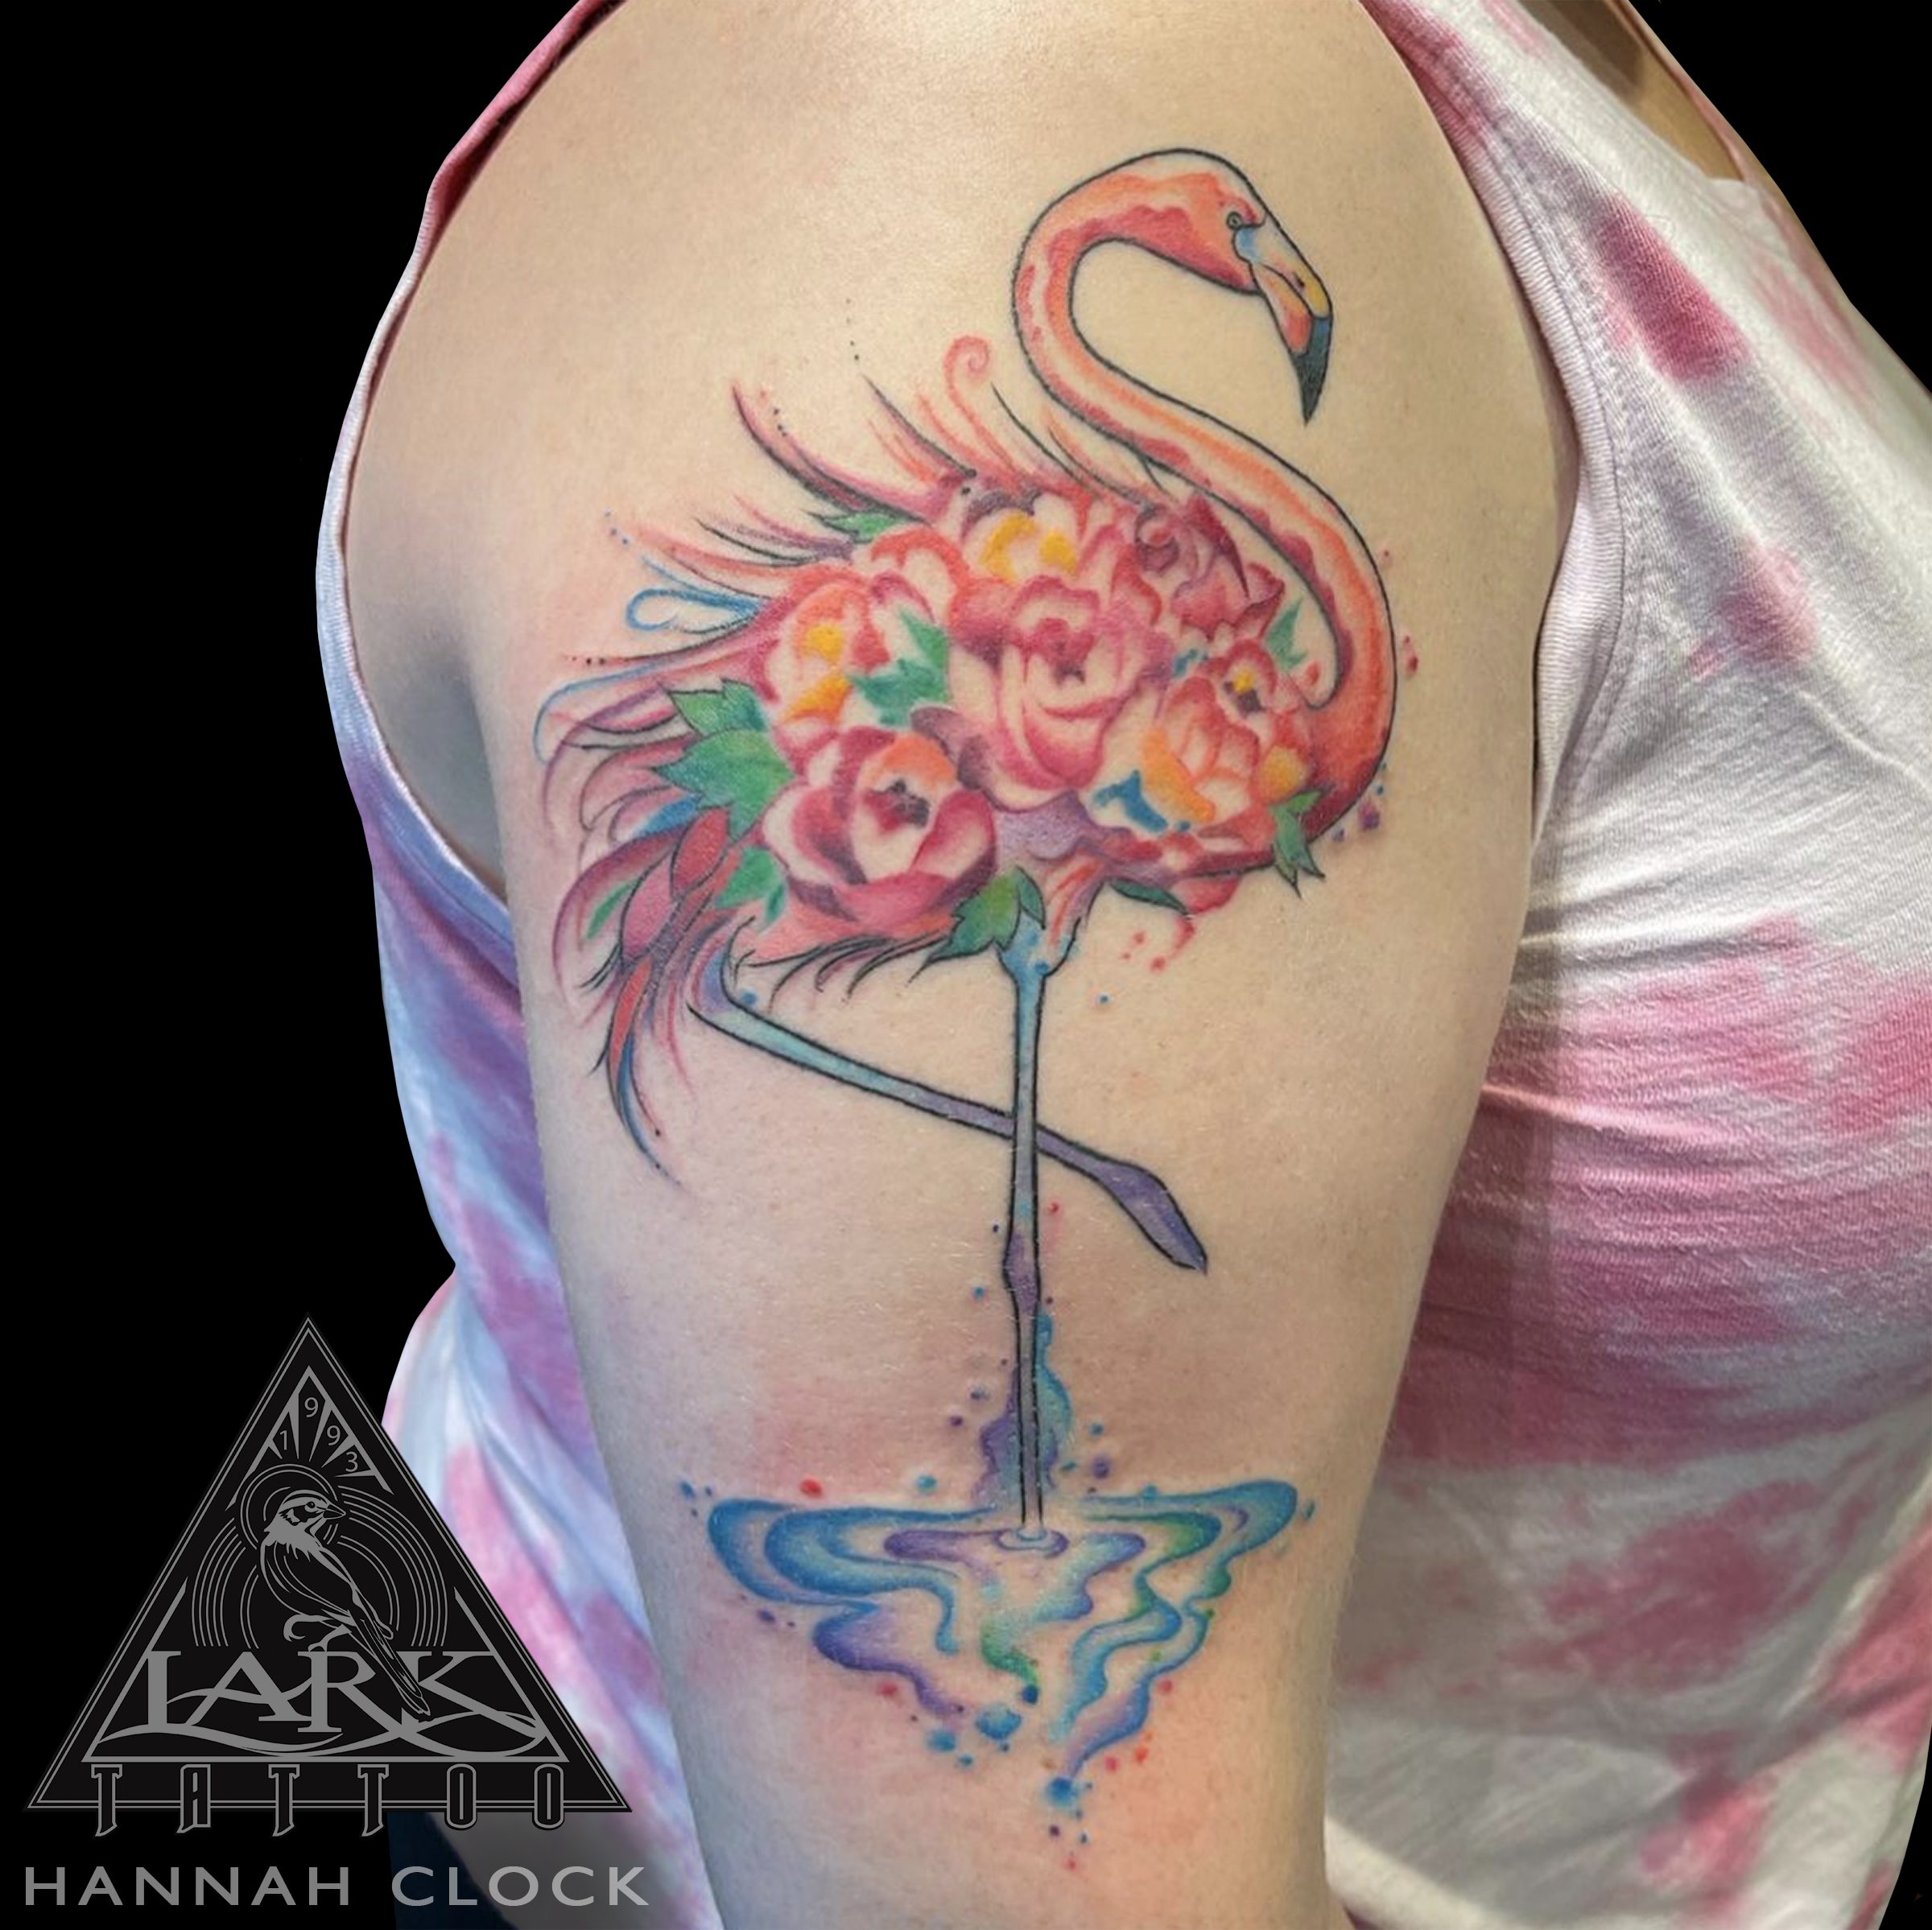 #LarkTattoo #HannahClock #HannahClockLarkTattoo #FemaleTattooer #FemaleArtist #LadyTattooer #Tattoo #Tattoos #Watercolor #WatercolorTattoo #Flamingo #FlamingoTattoo #ArmTattoo #ColorTattoo #AnimalTattoo #BirdTattoo #TattooArtist #Tattoist #Tattooer #LongIslandTattooArtist #LongIslandTattooer #LongIslandTattoo #TattooOfTheDay #Tat #Tats #Tatts #Tatted #Inked #Ink #TattooInk #AmazingInk #AmazingTattoo #BodyArt #LarkTattooWestbury #Westbury #LongIsland #NY #NewYork #USA #Art #Tattedup #InkedUp #LarkTattoos